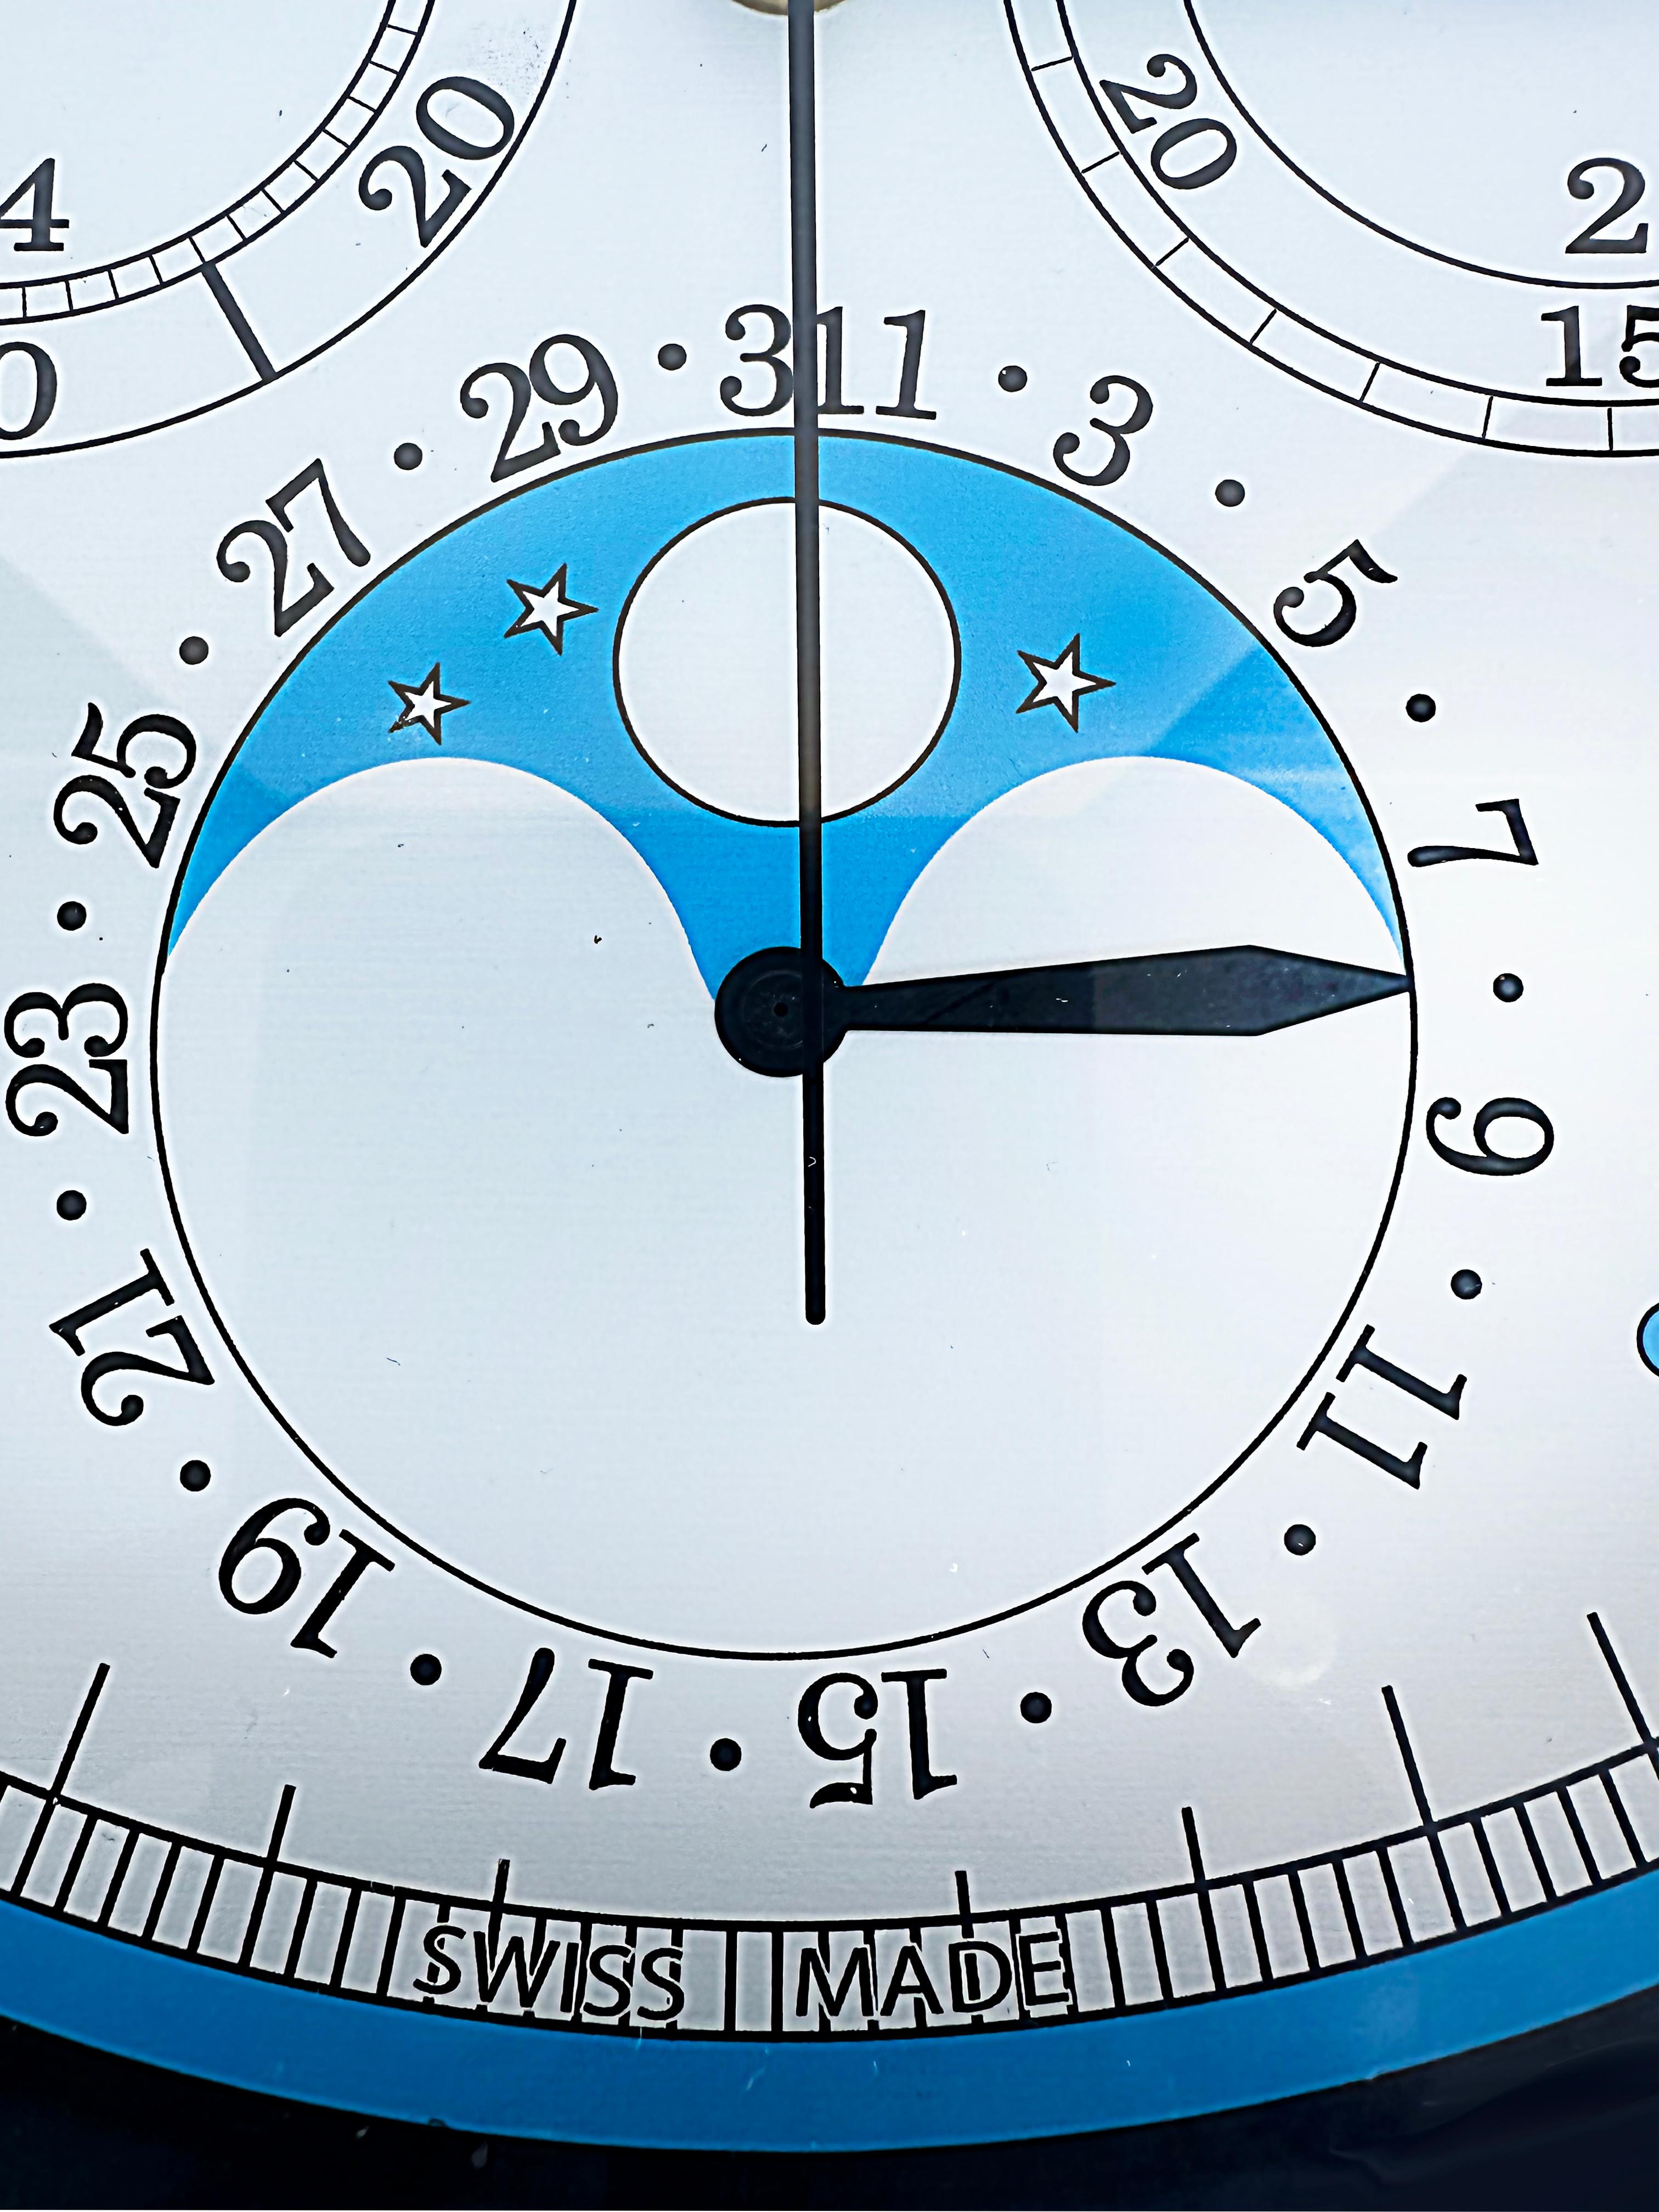 Swiss Patek Philippe Geneve, Switzerland Dealer's Advertising Chronograph Wall Clock